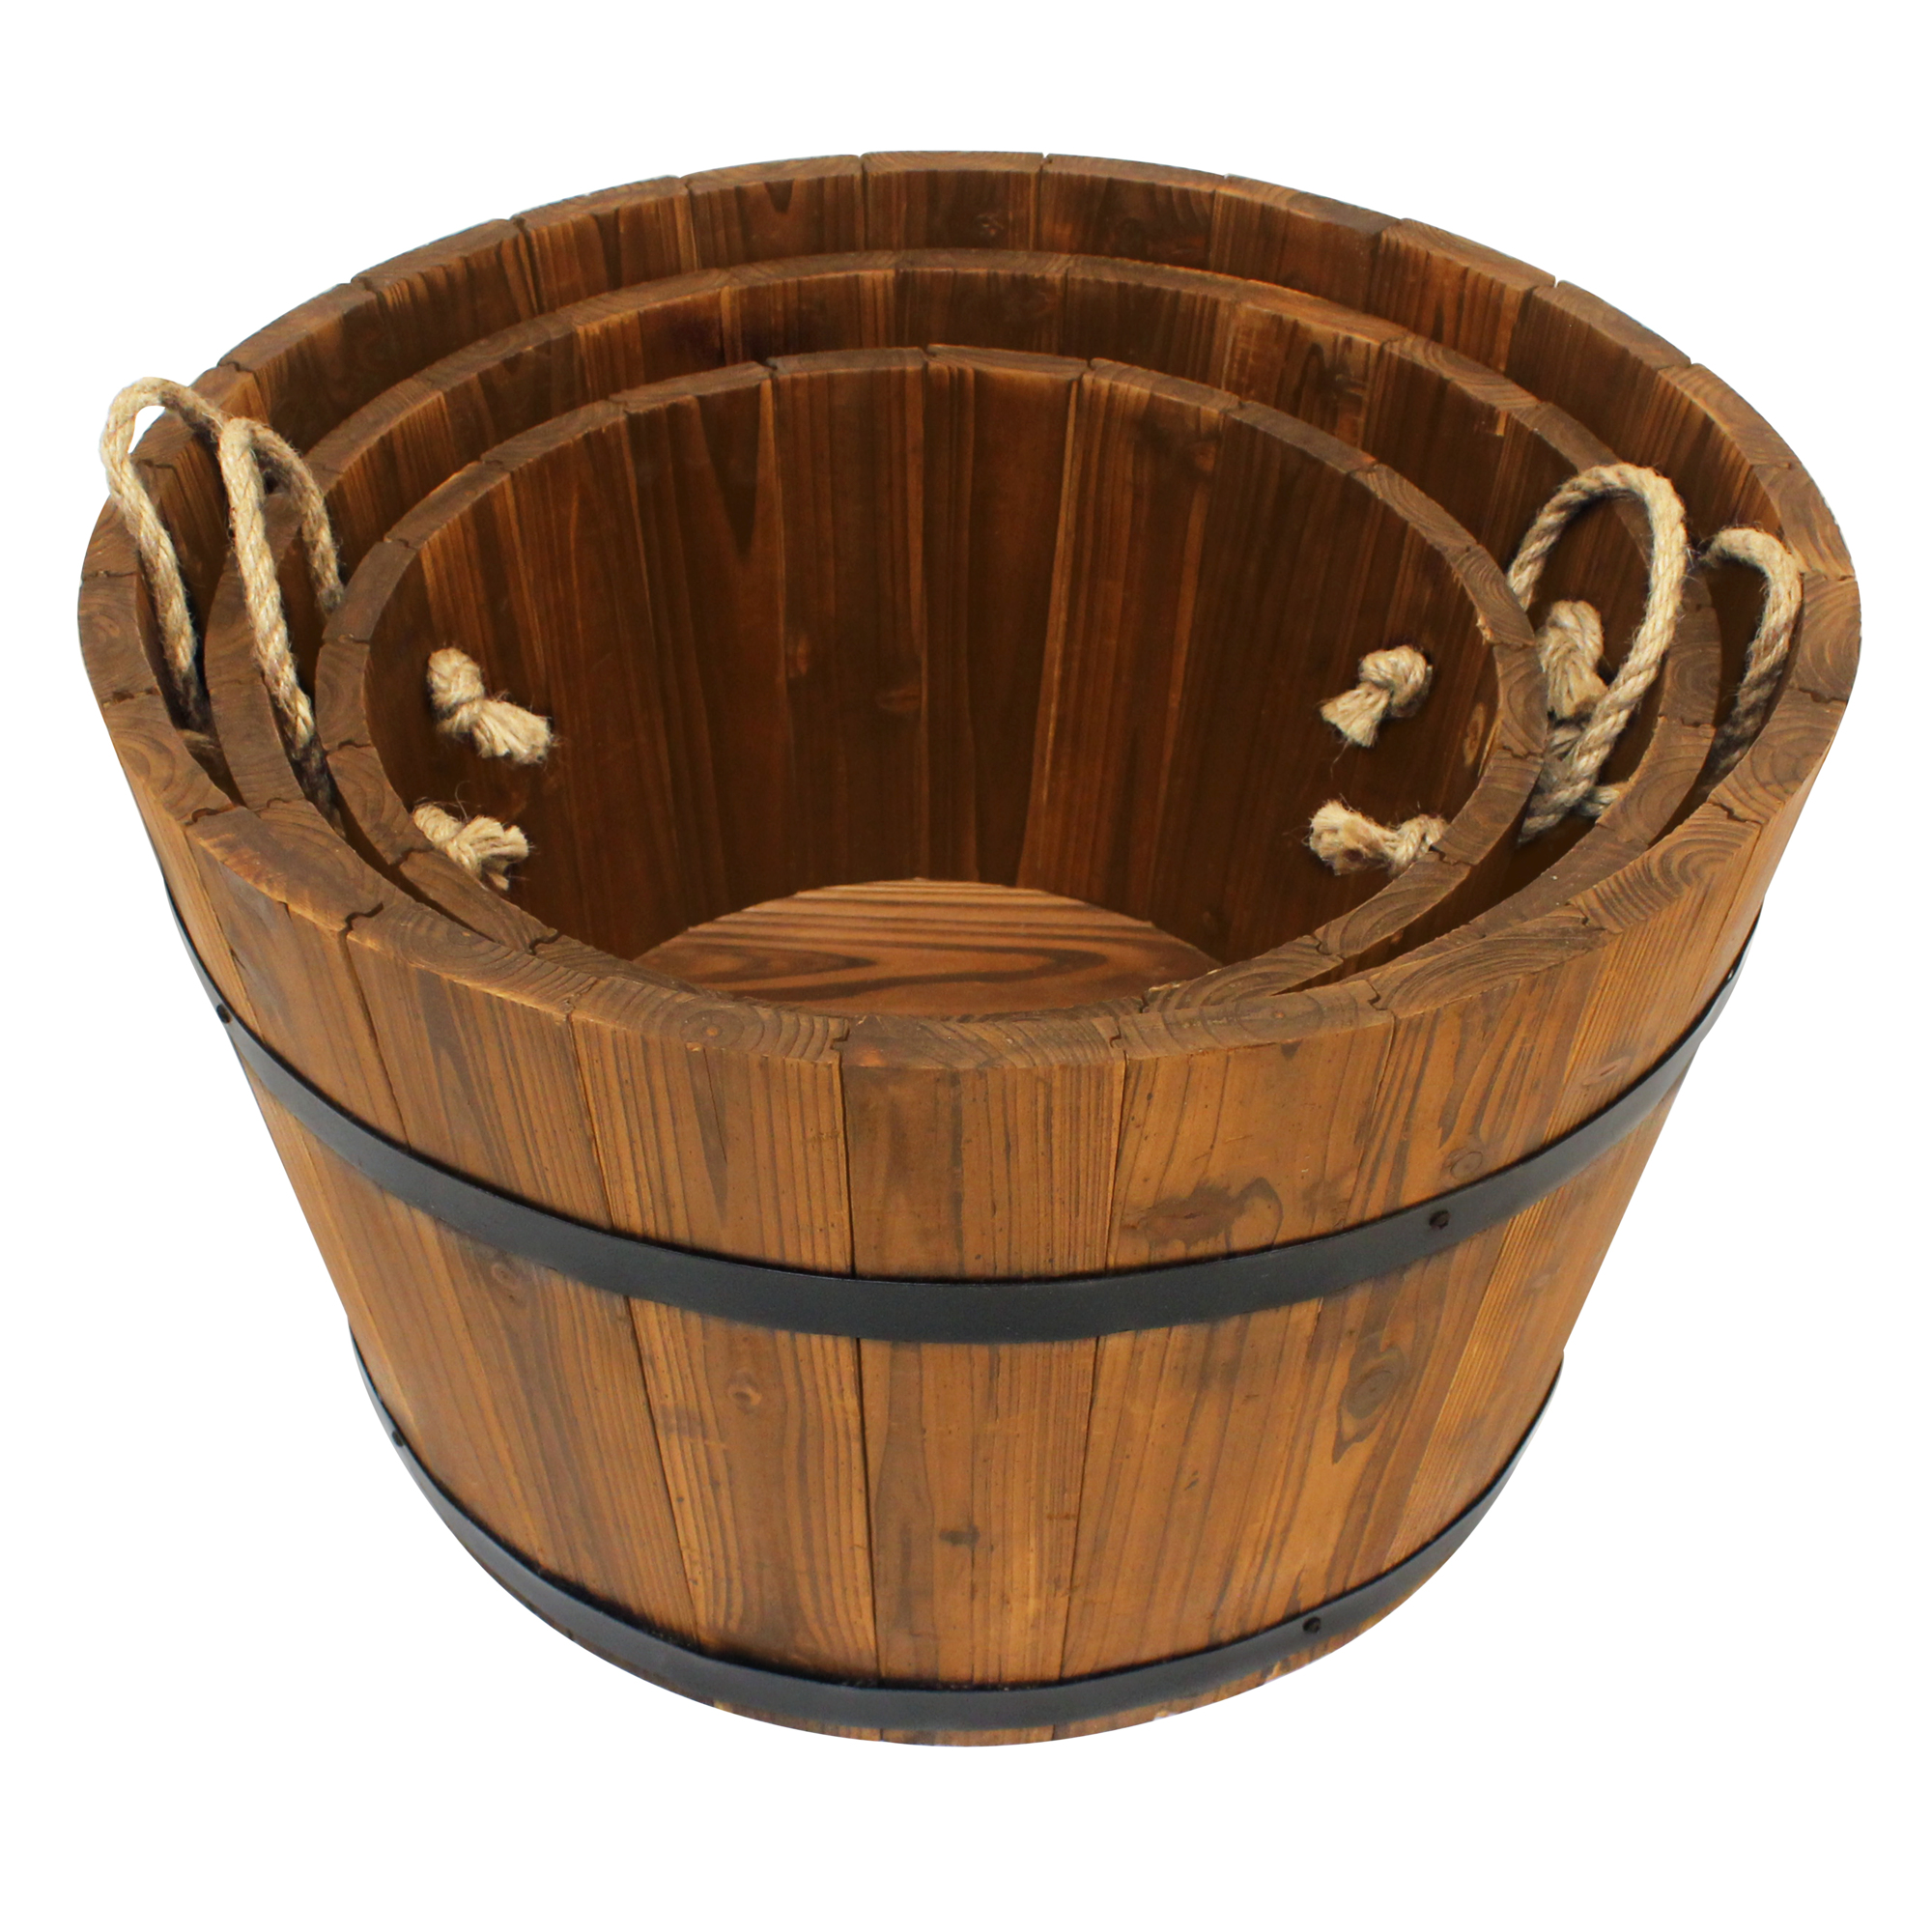 Leigh Country, Half Barrel Bucket Planter Set, Material Wood, Model TX 93960